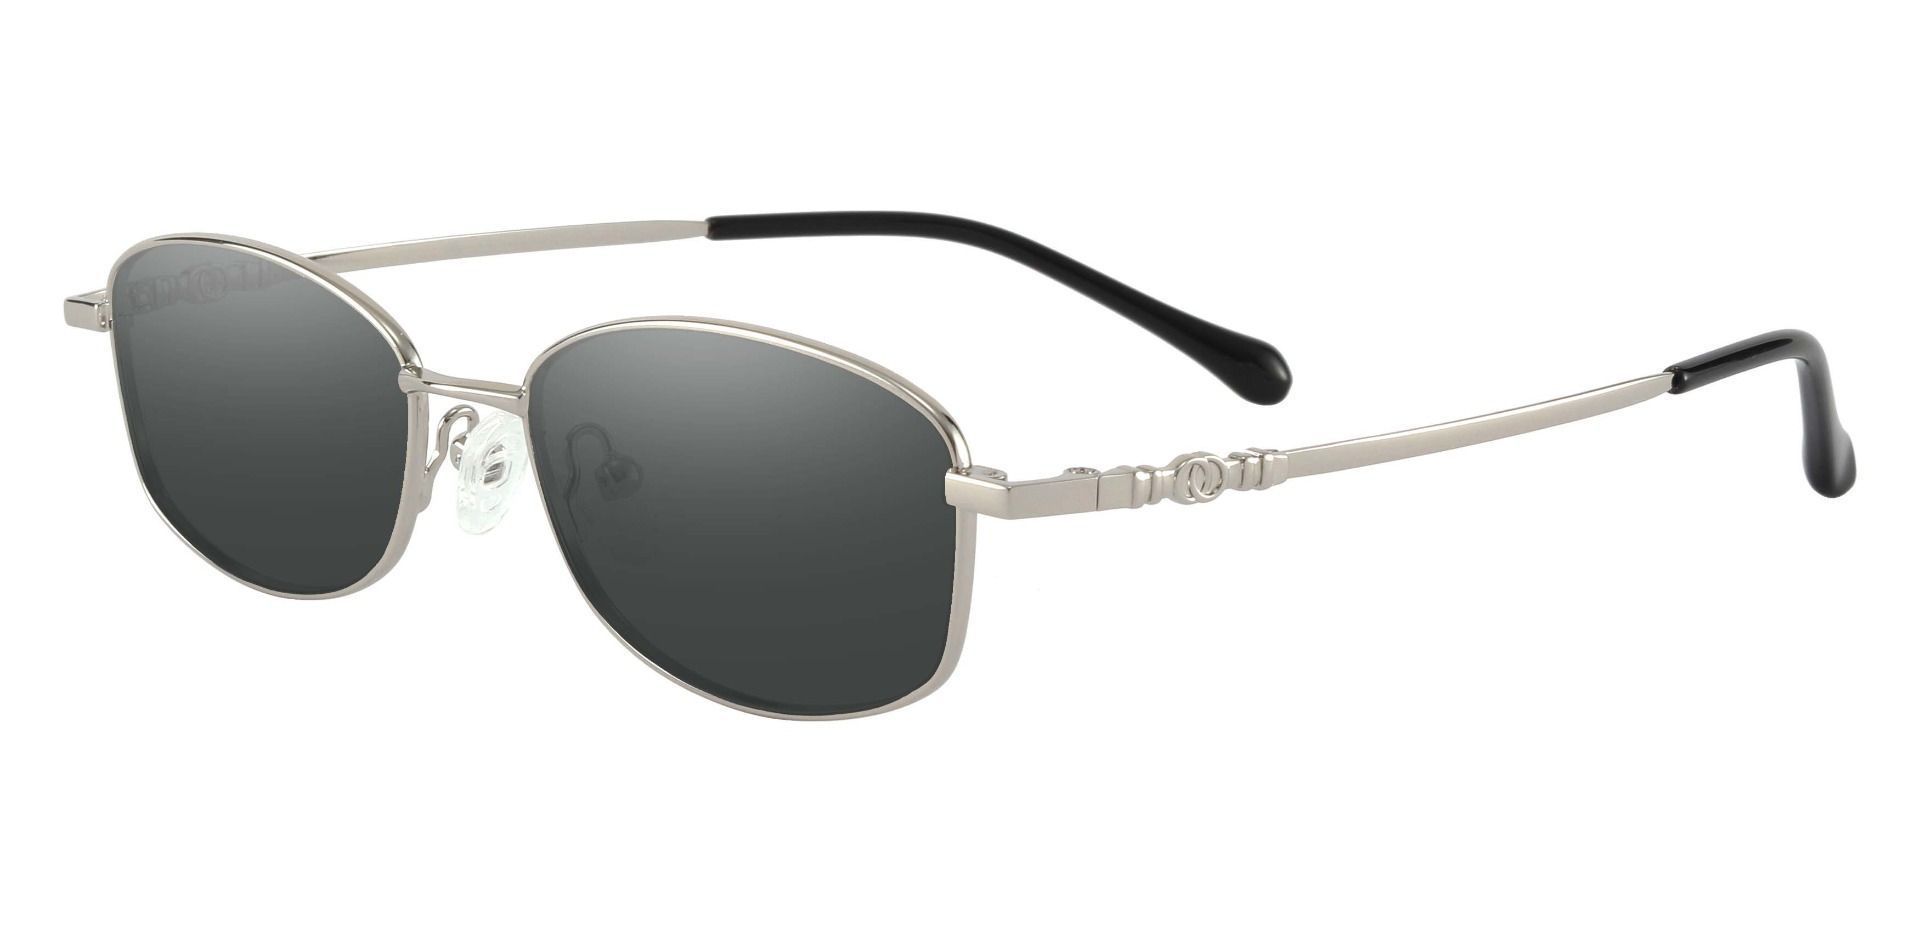 Naples Rectangle Non-Rx Sunglasses - Silver Frame With Gray Lenses